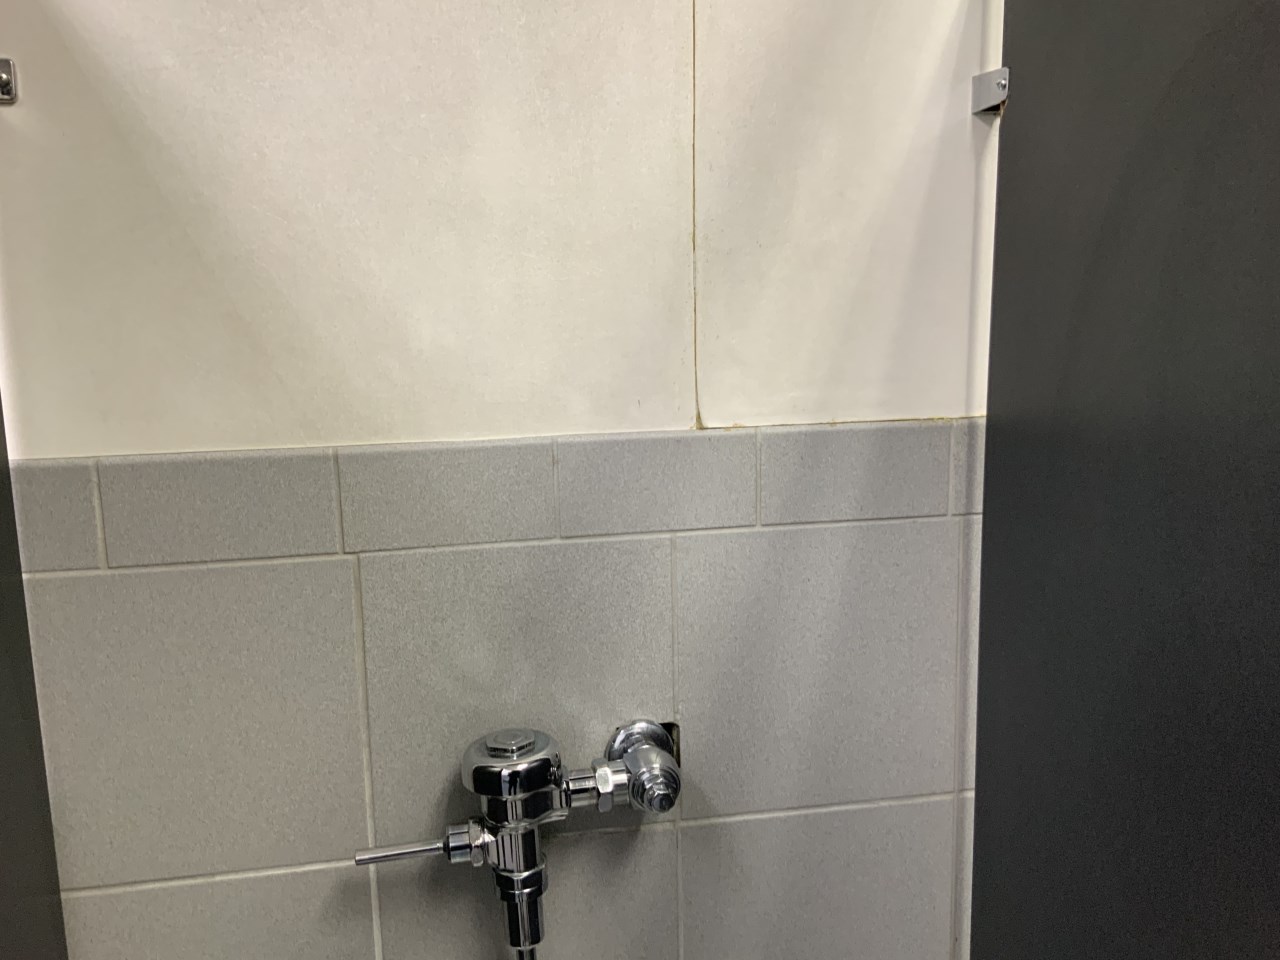 Wallpaper peeling and hole around urinal plumbing in dealership bathroom